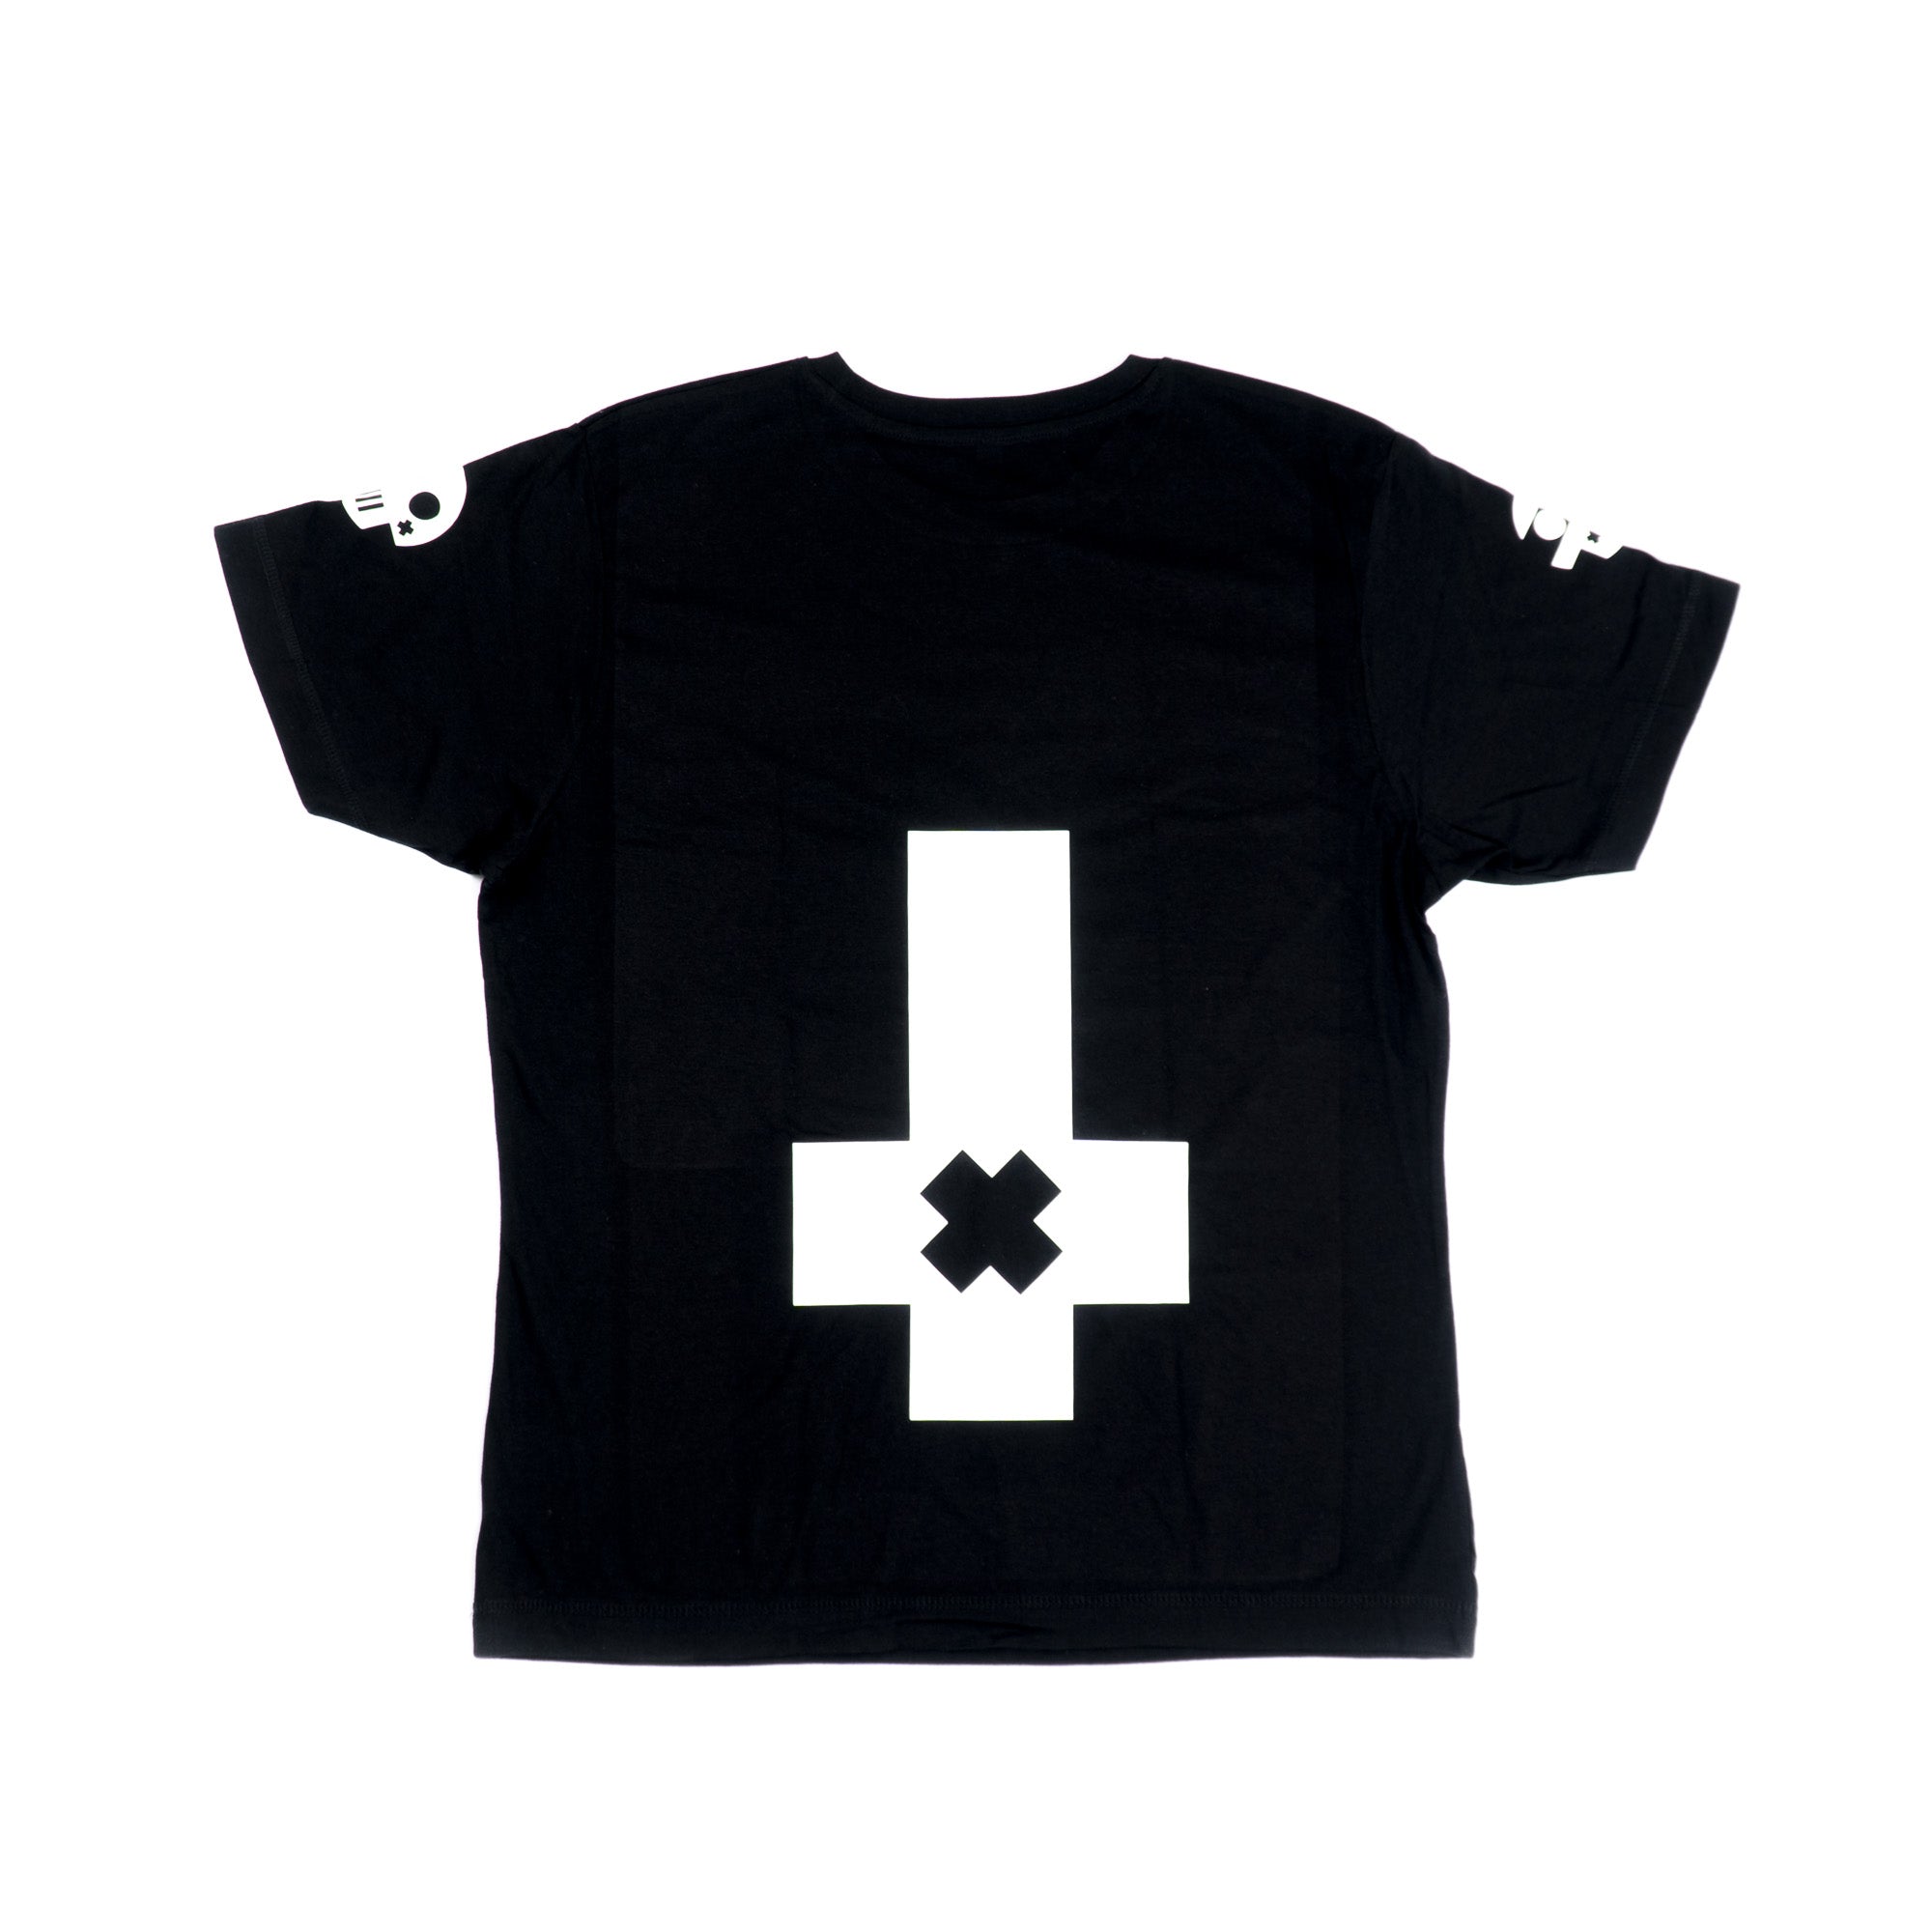 Blacklist - Advanced Collection 1 Shirt